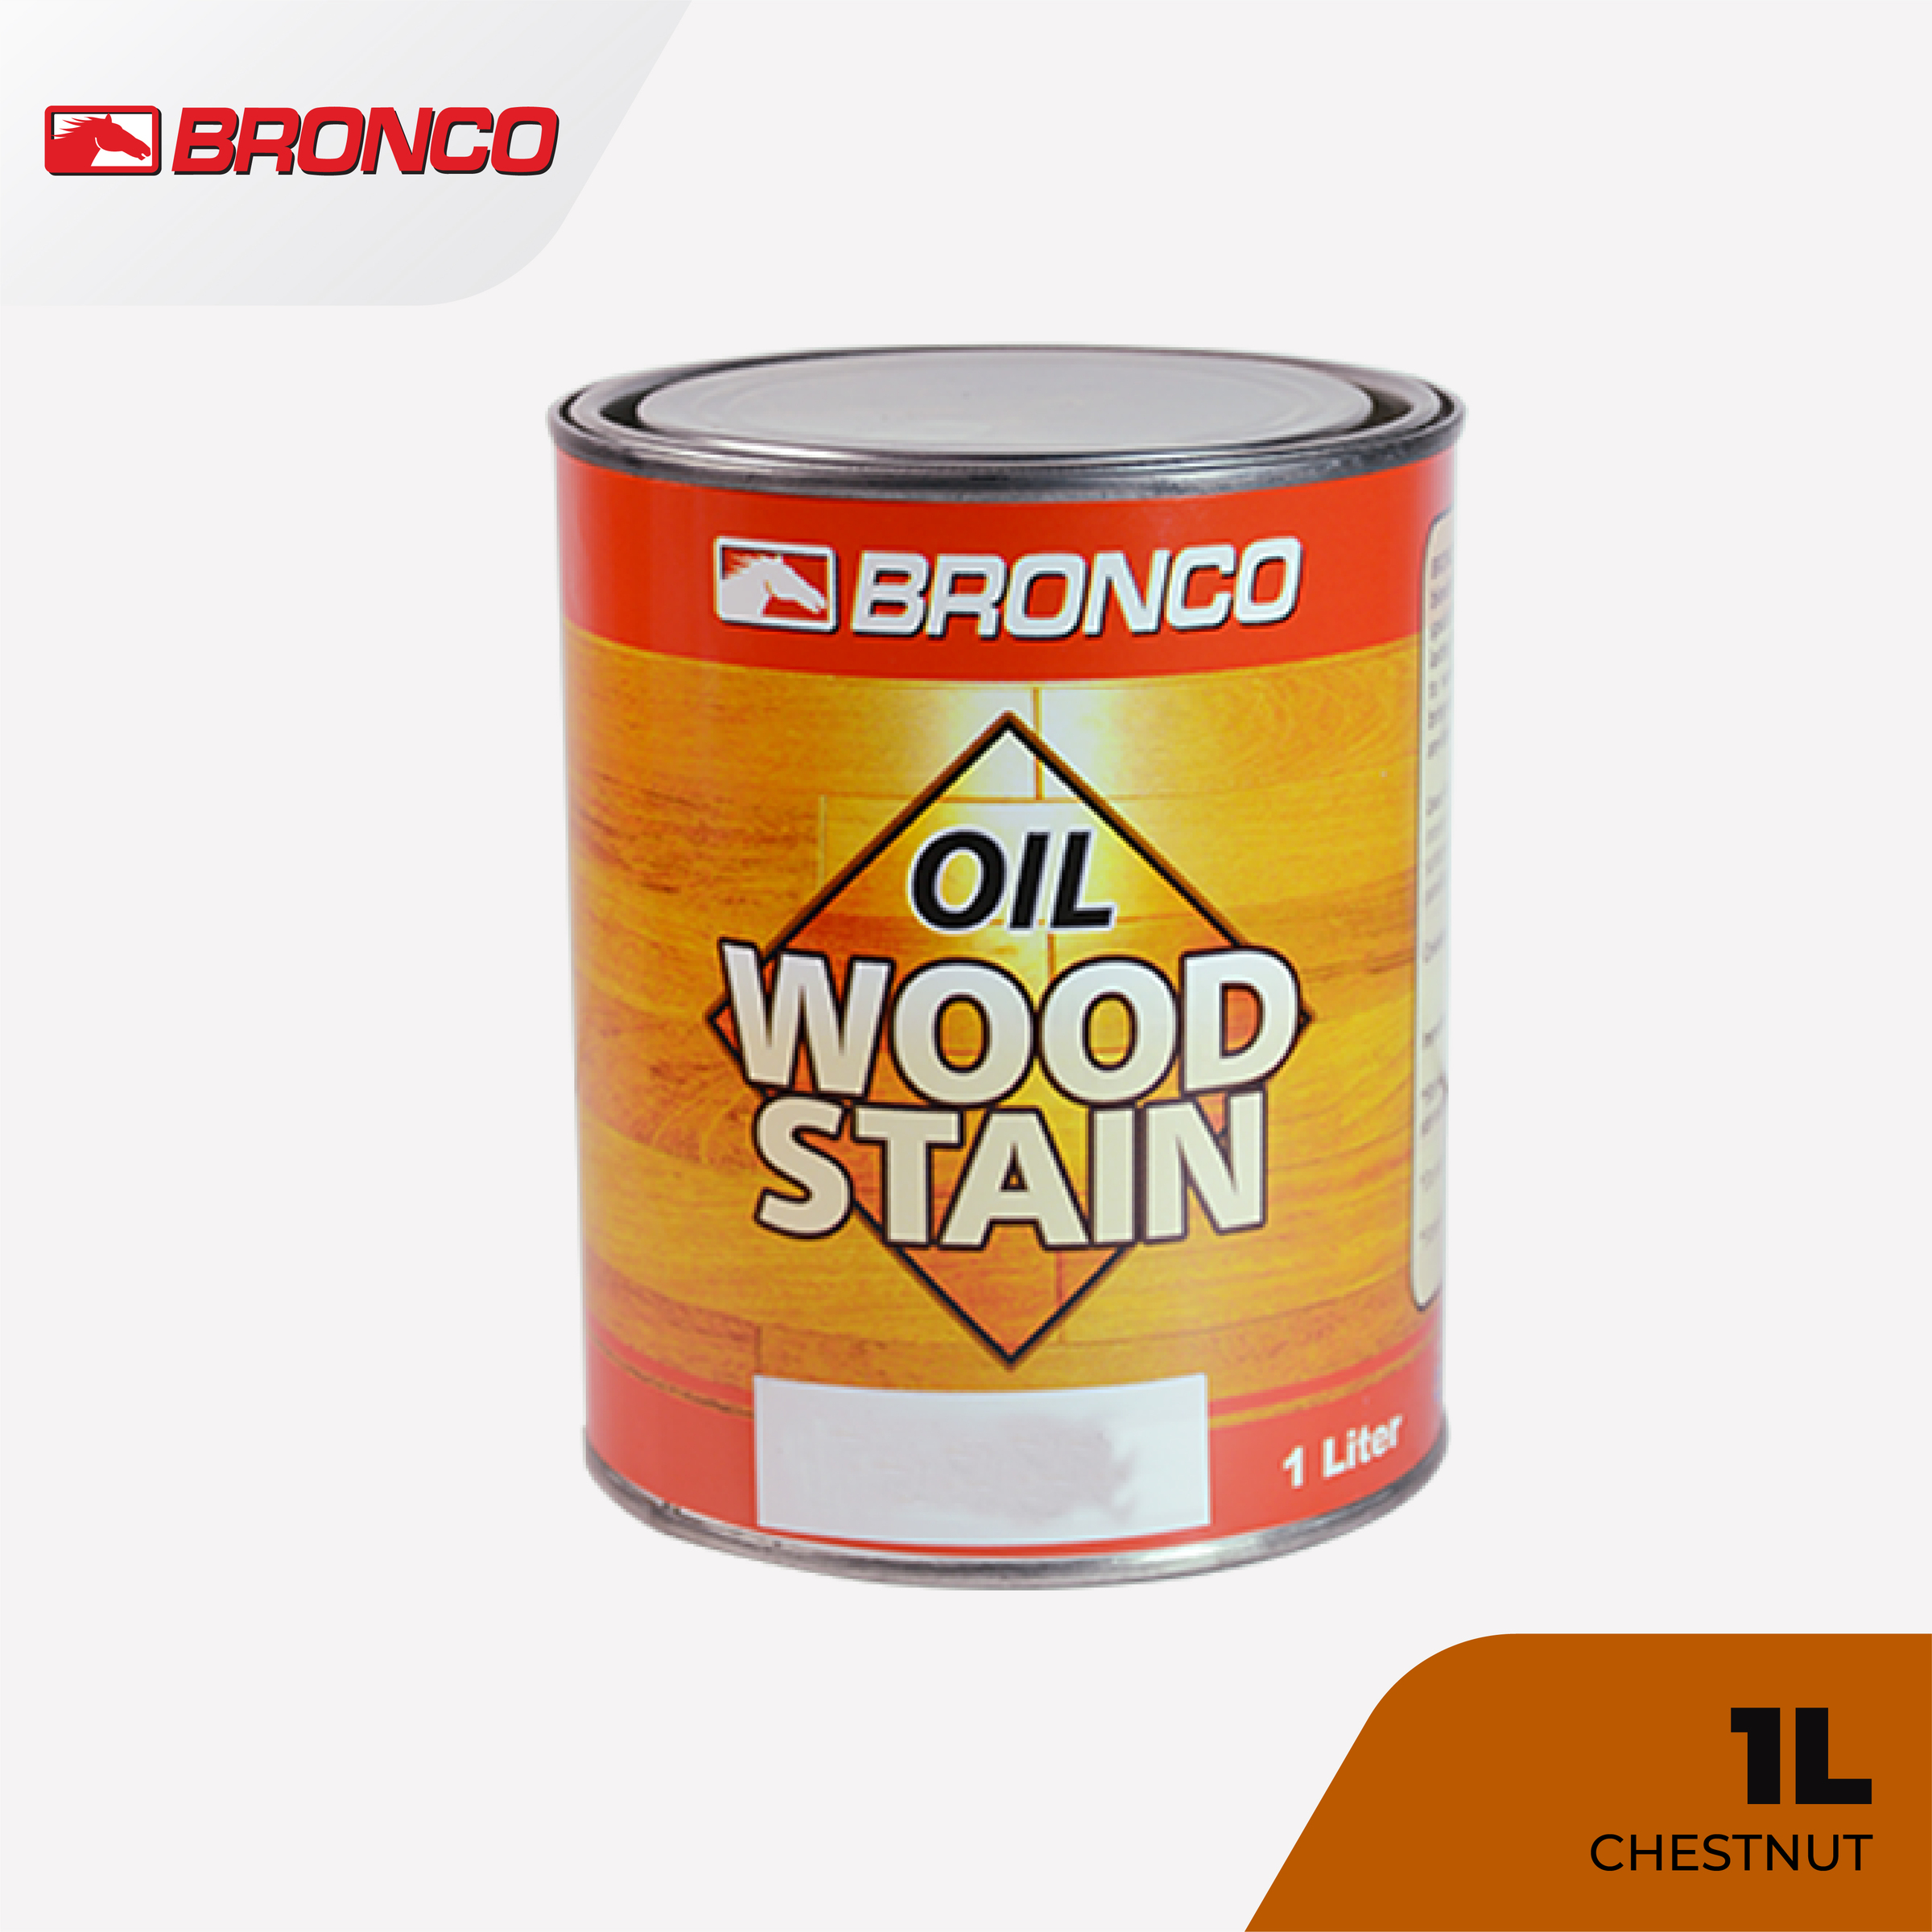 Bronco Oil Wood Stain Chestnut - 1L